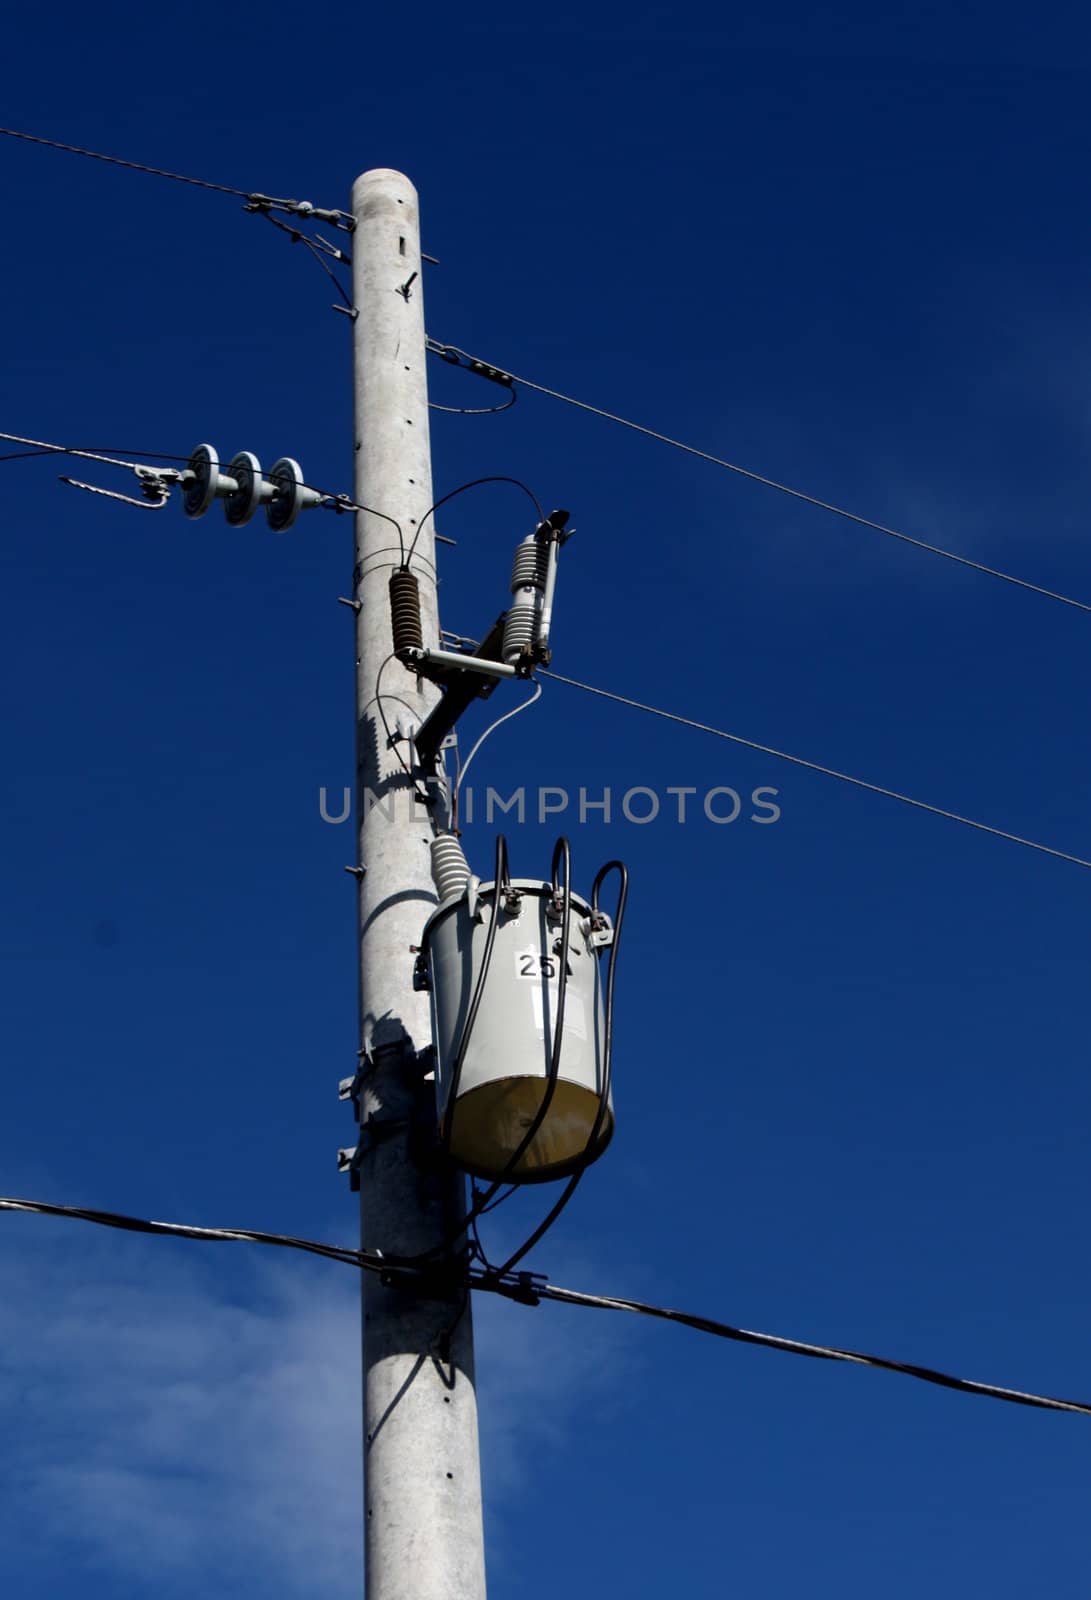 A single electric power transformer against a clear blue sky.